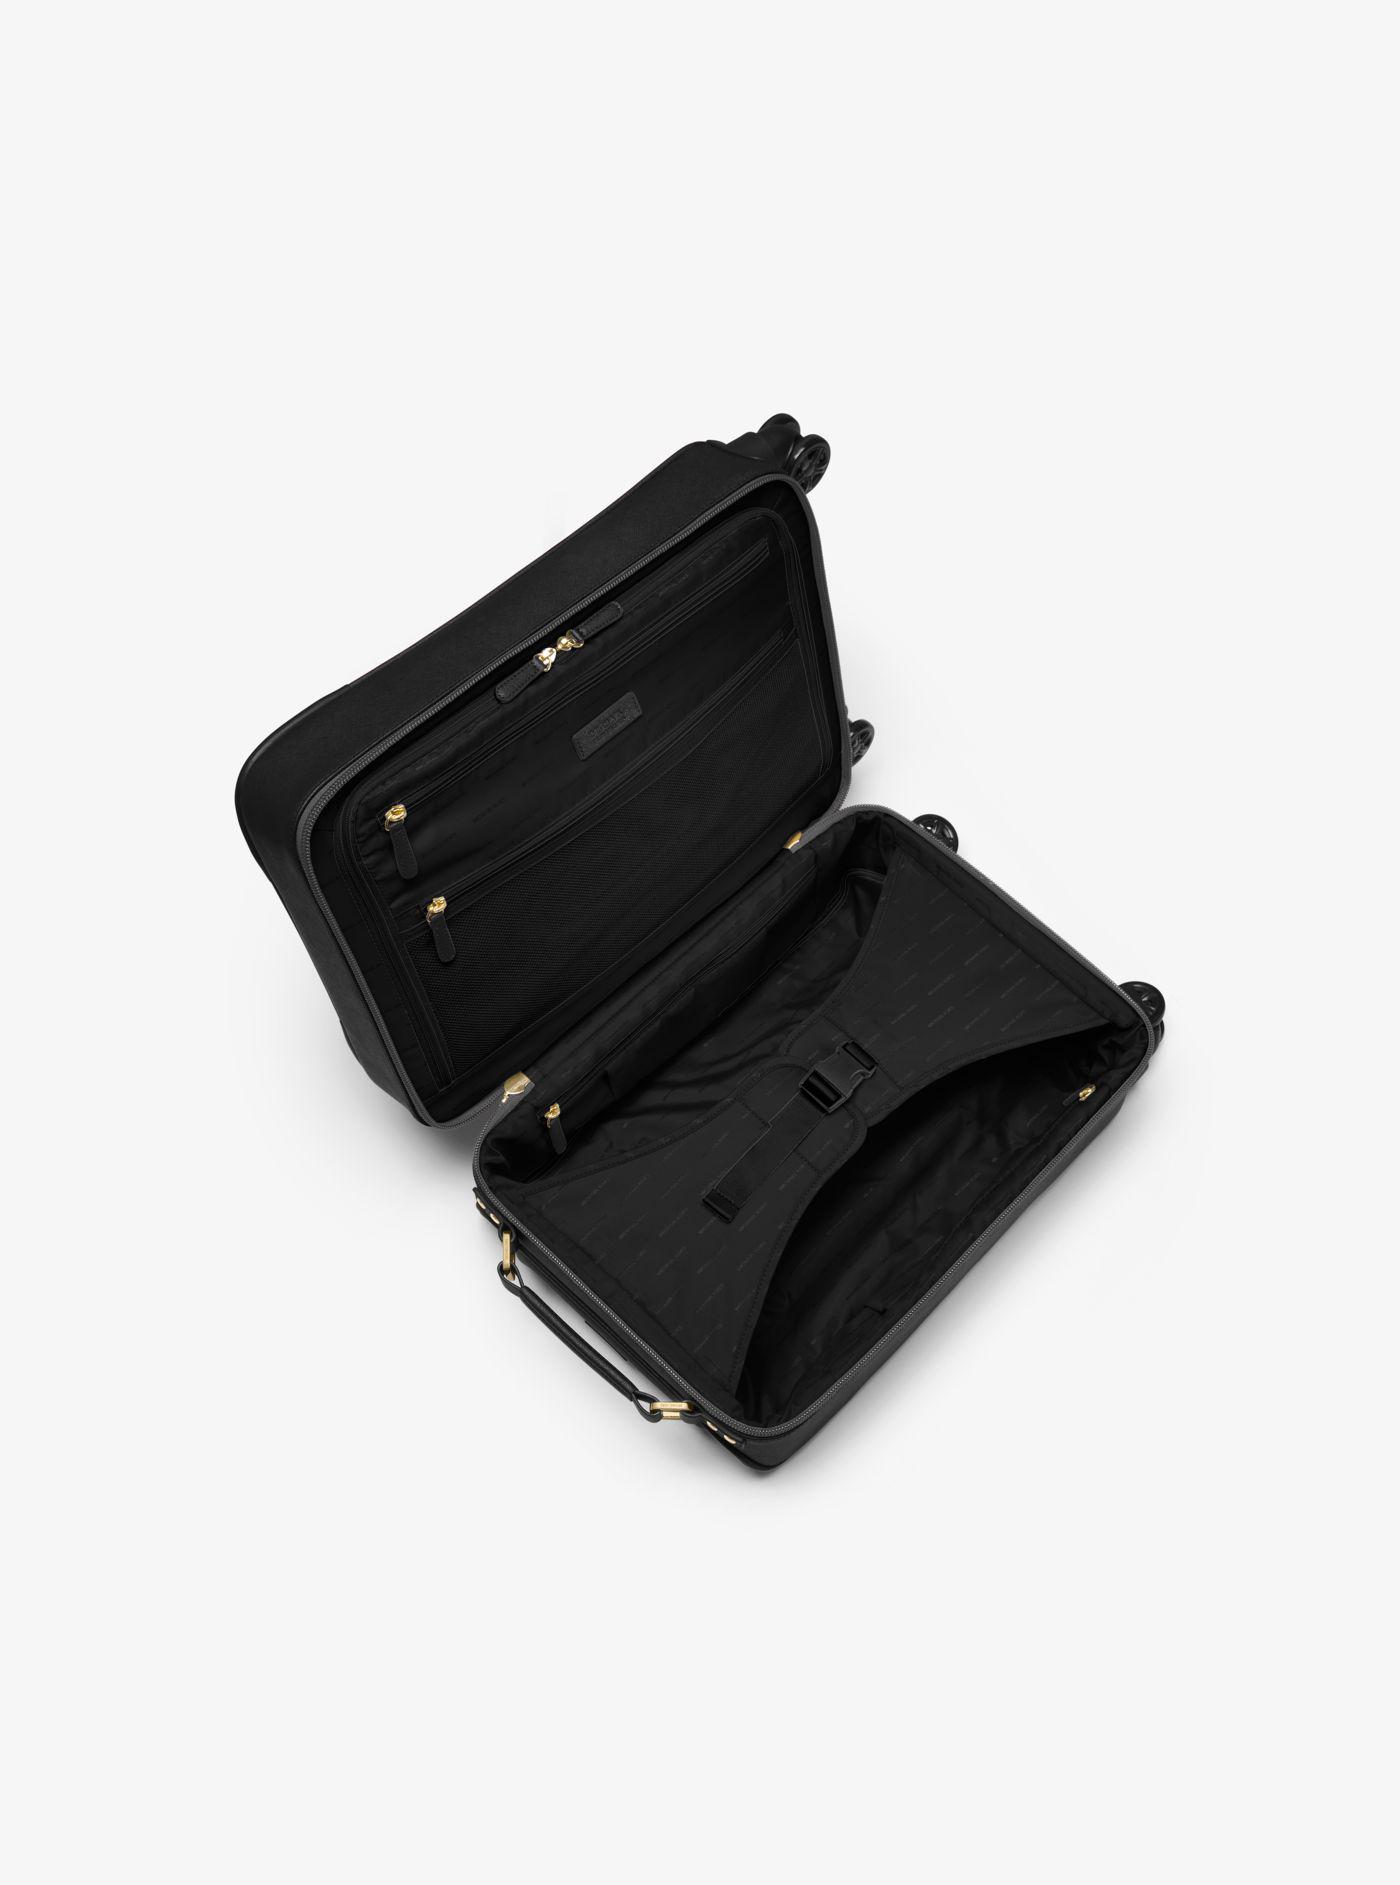 Michael Kors Jet Set Travel Large Saffiano Leather Suitcase in Black | Lyst